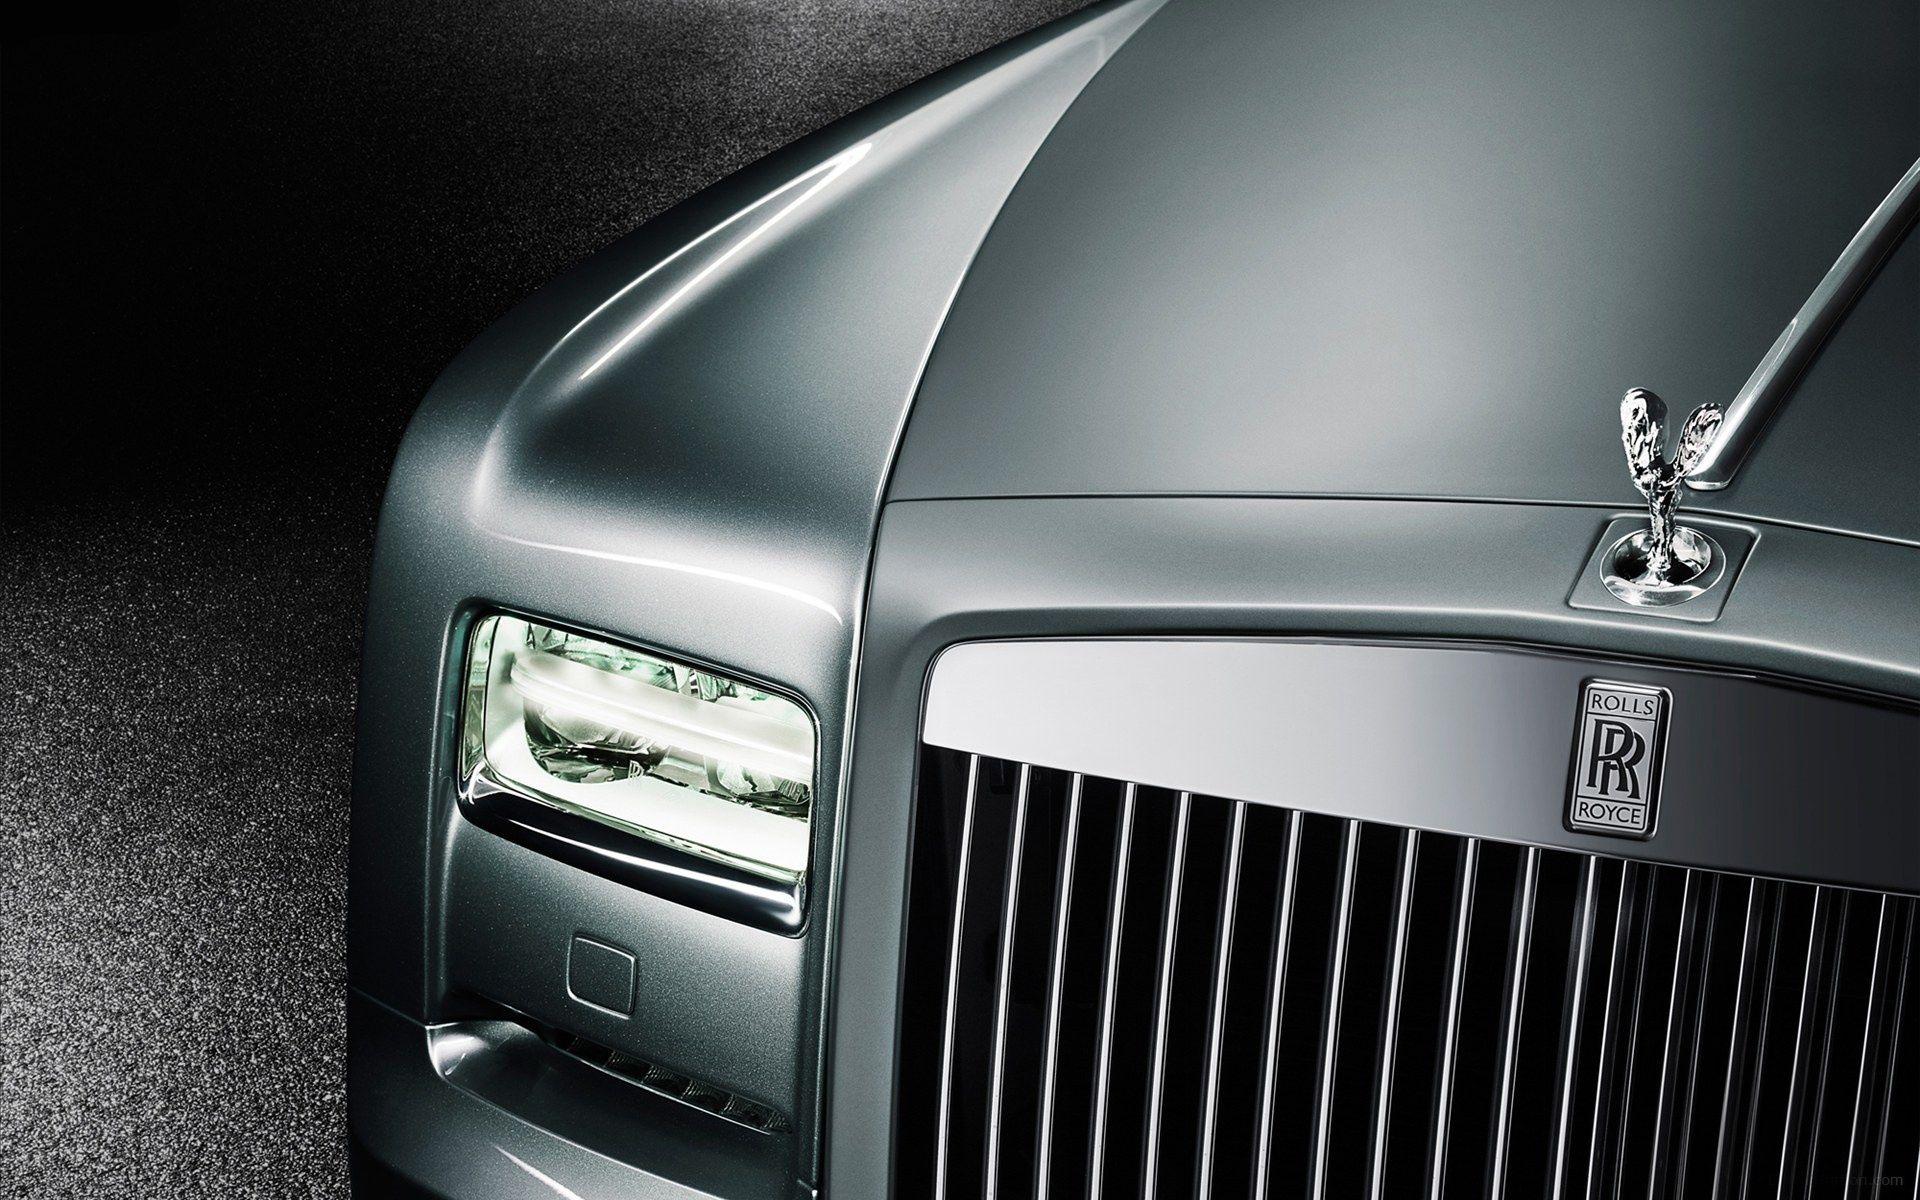 HD wallpaper Stunning Rolls Royce Phantom limousine luxury cars  gorgeous  Wallpaper Flare